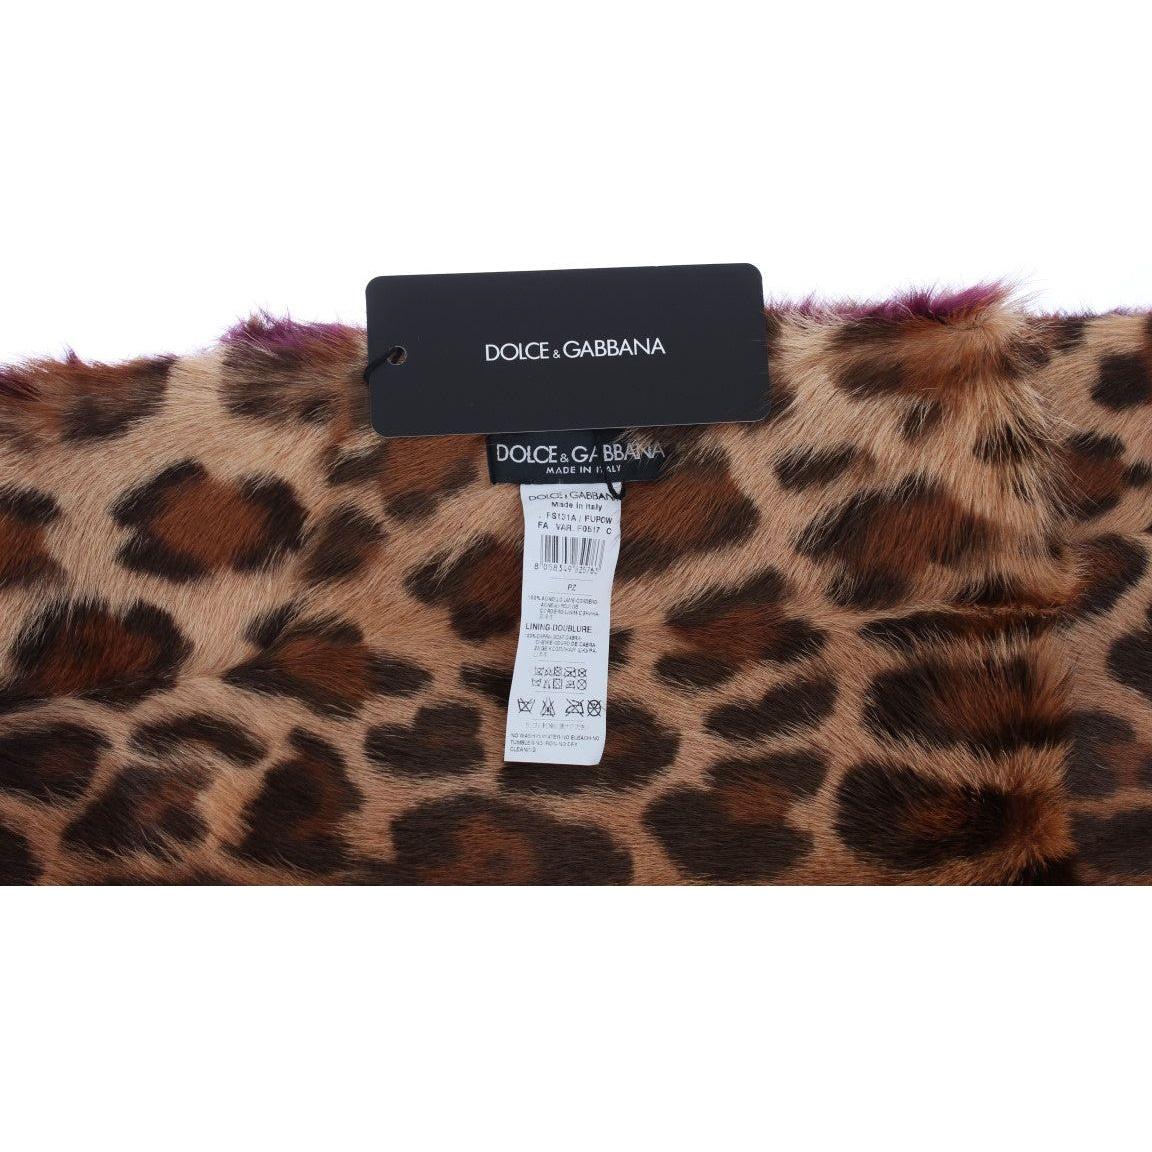 Dolce & Gabbana Exquisite Leopard Print Lambskin Fur Scarf purple-lamb-fur-leopard-print-scarf